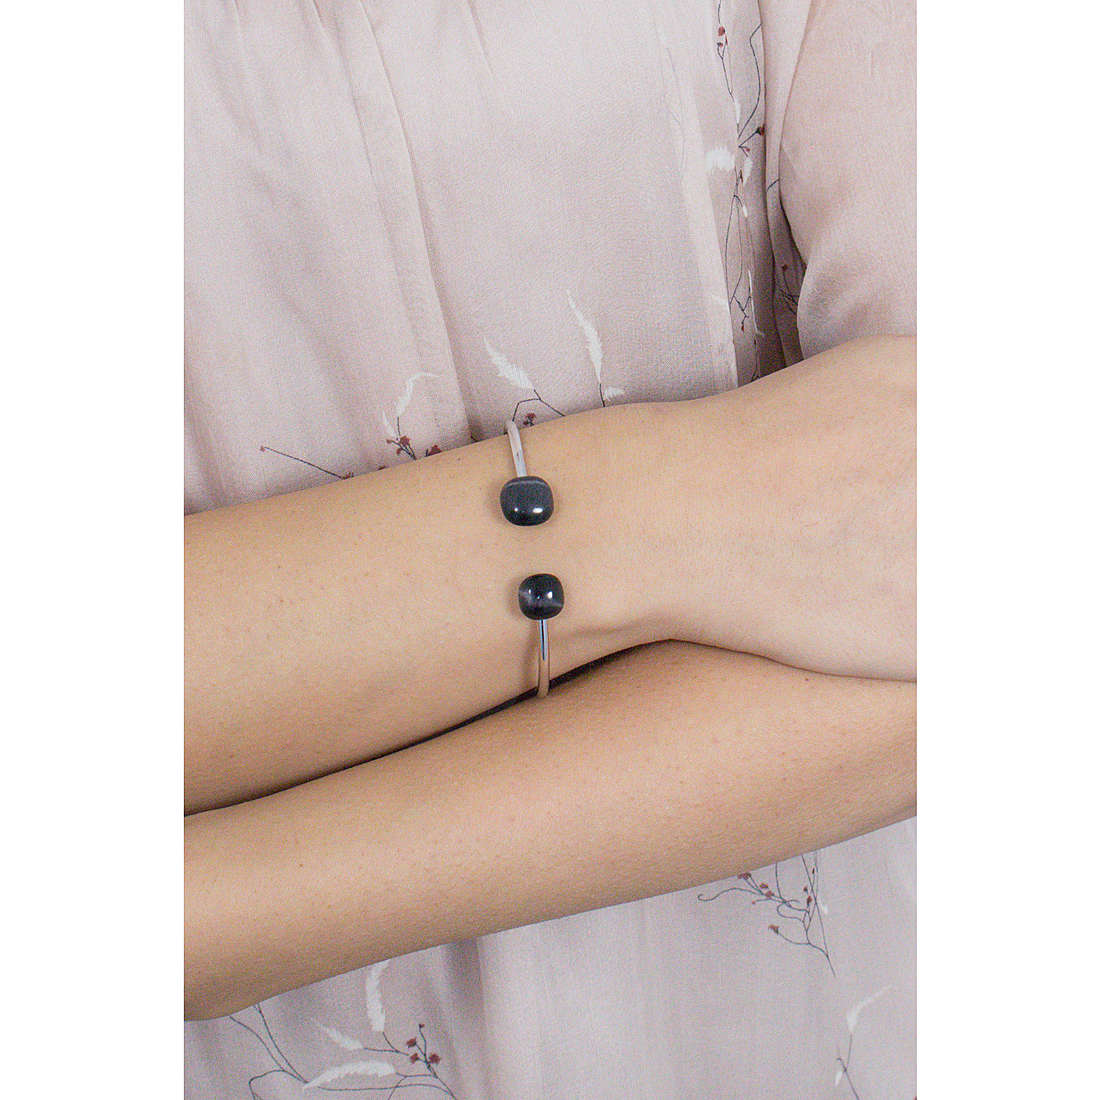 Morellato bracciali Gemma donna SAKK14 indosso